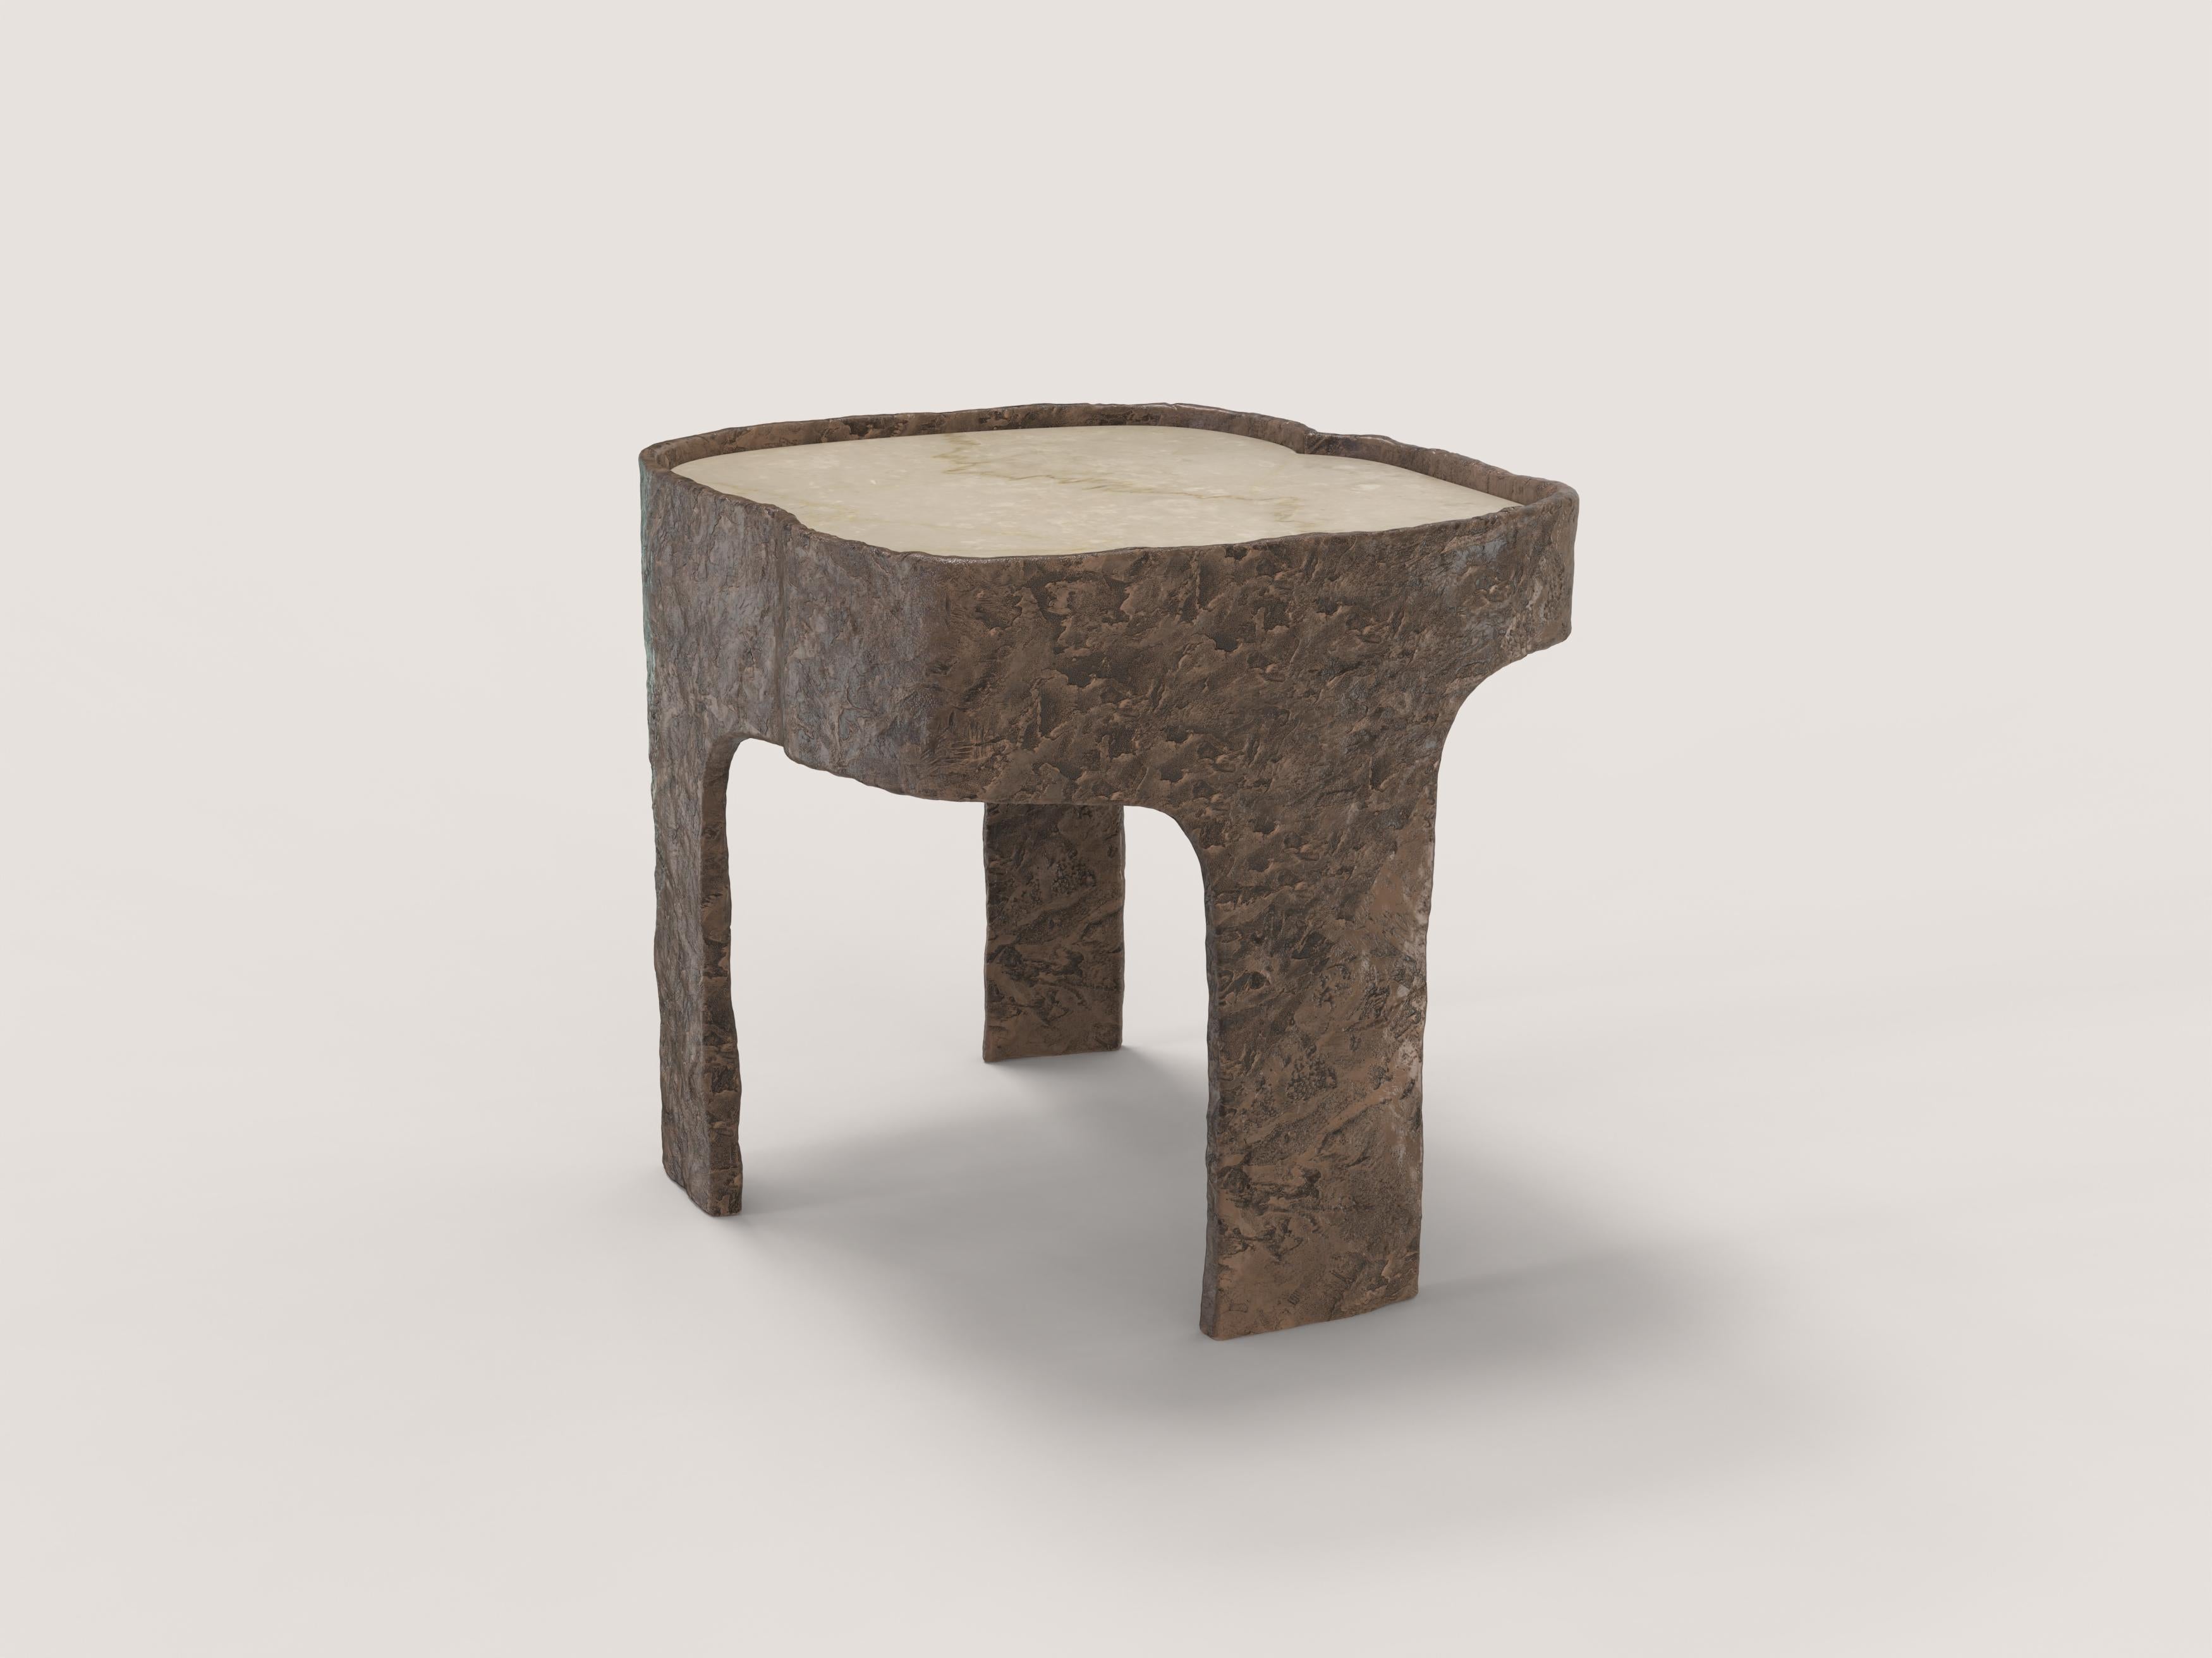 Cast Limited Edition Marble Bronze Table, Sumatra V1 by Edizione Limitata For Sale